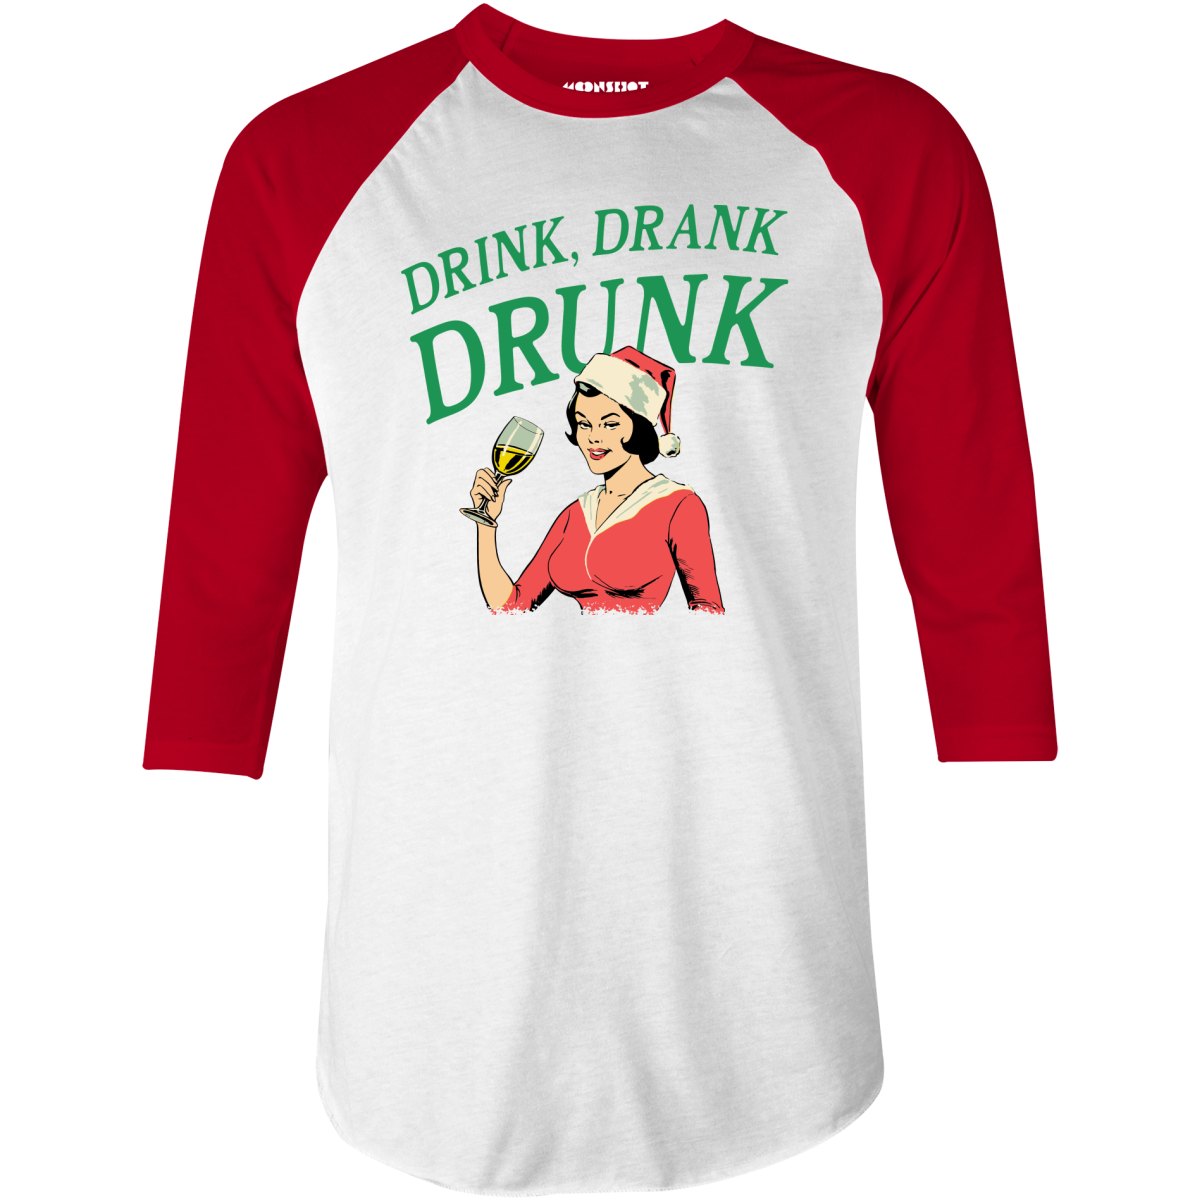 Drink, Drank, Drunk - 3/4 Sleeve Raglan T-Shirt